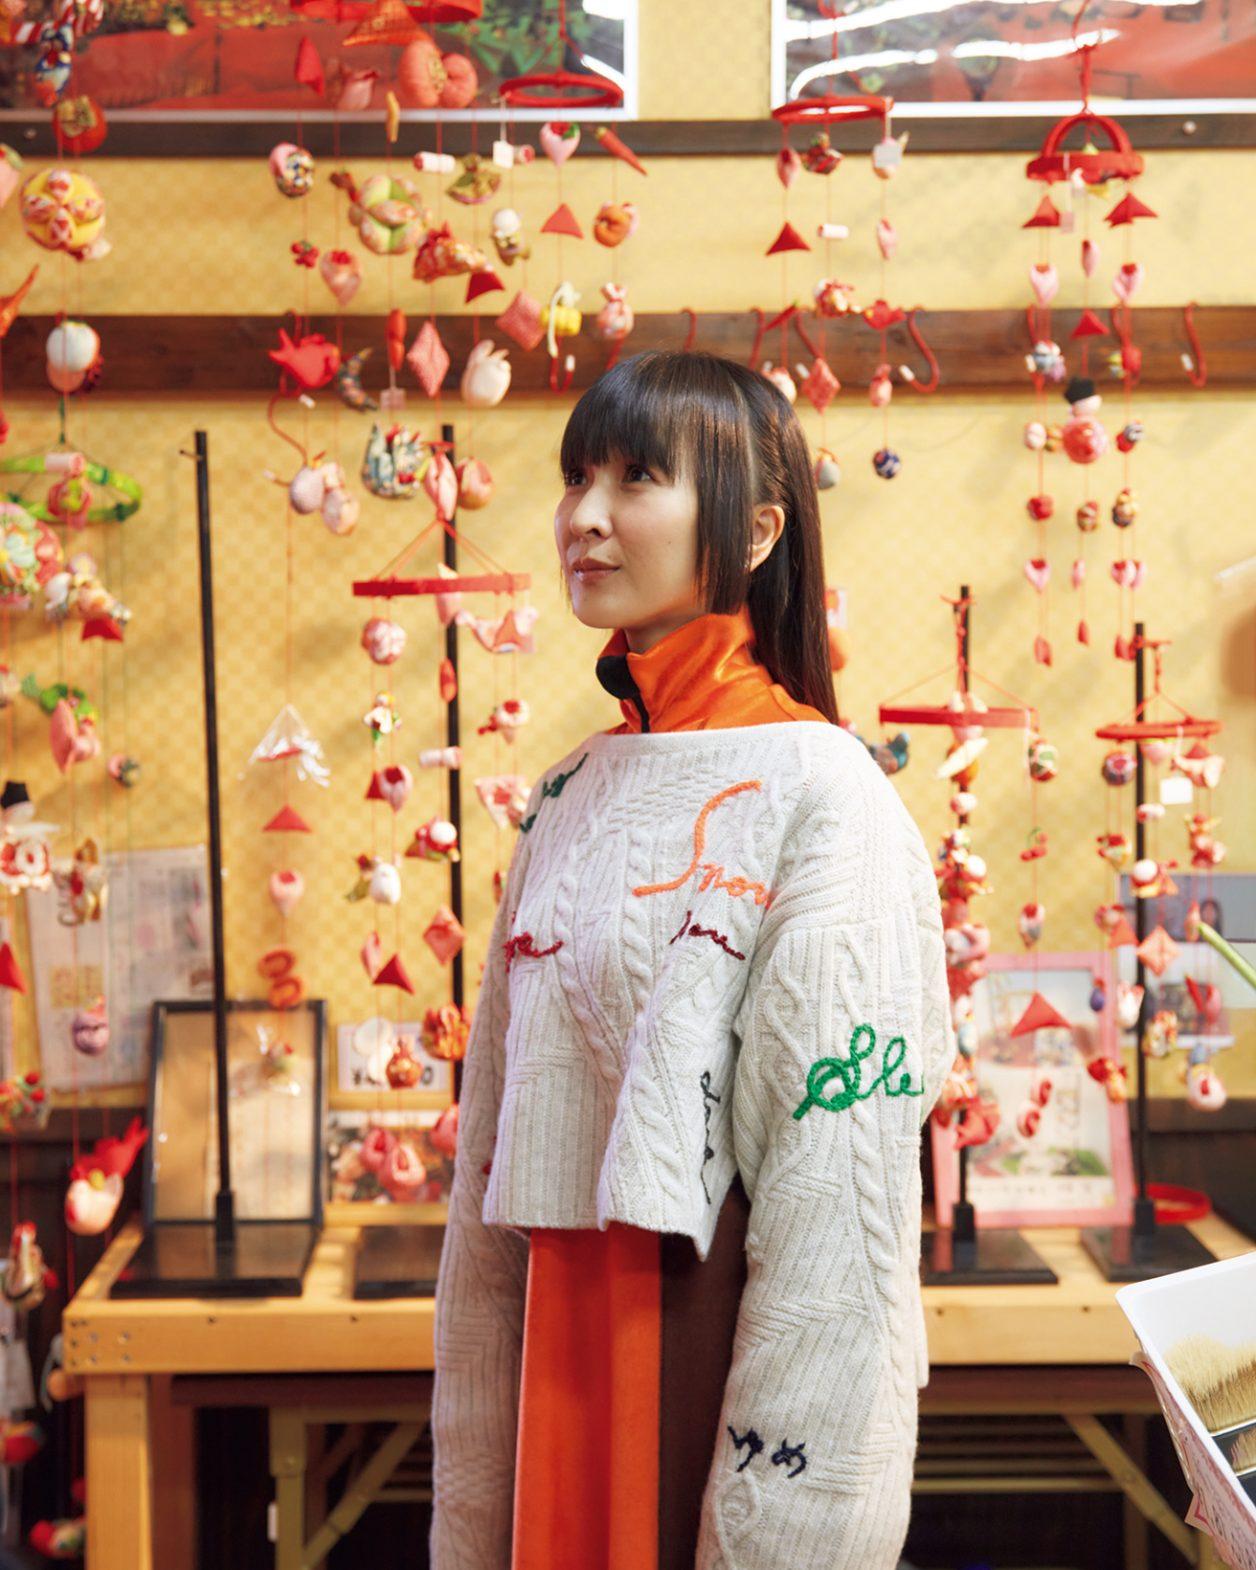 Kokontozai: KASHIYUKA’s Shop of Japanese Arts and Crafts — Doll’s Festival Mobiles